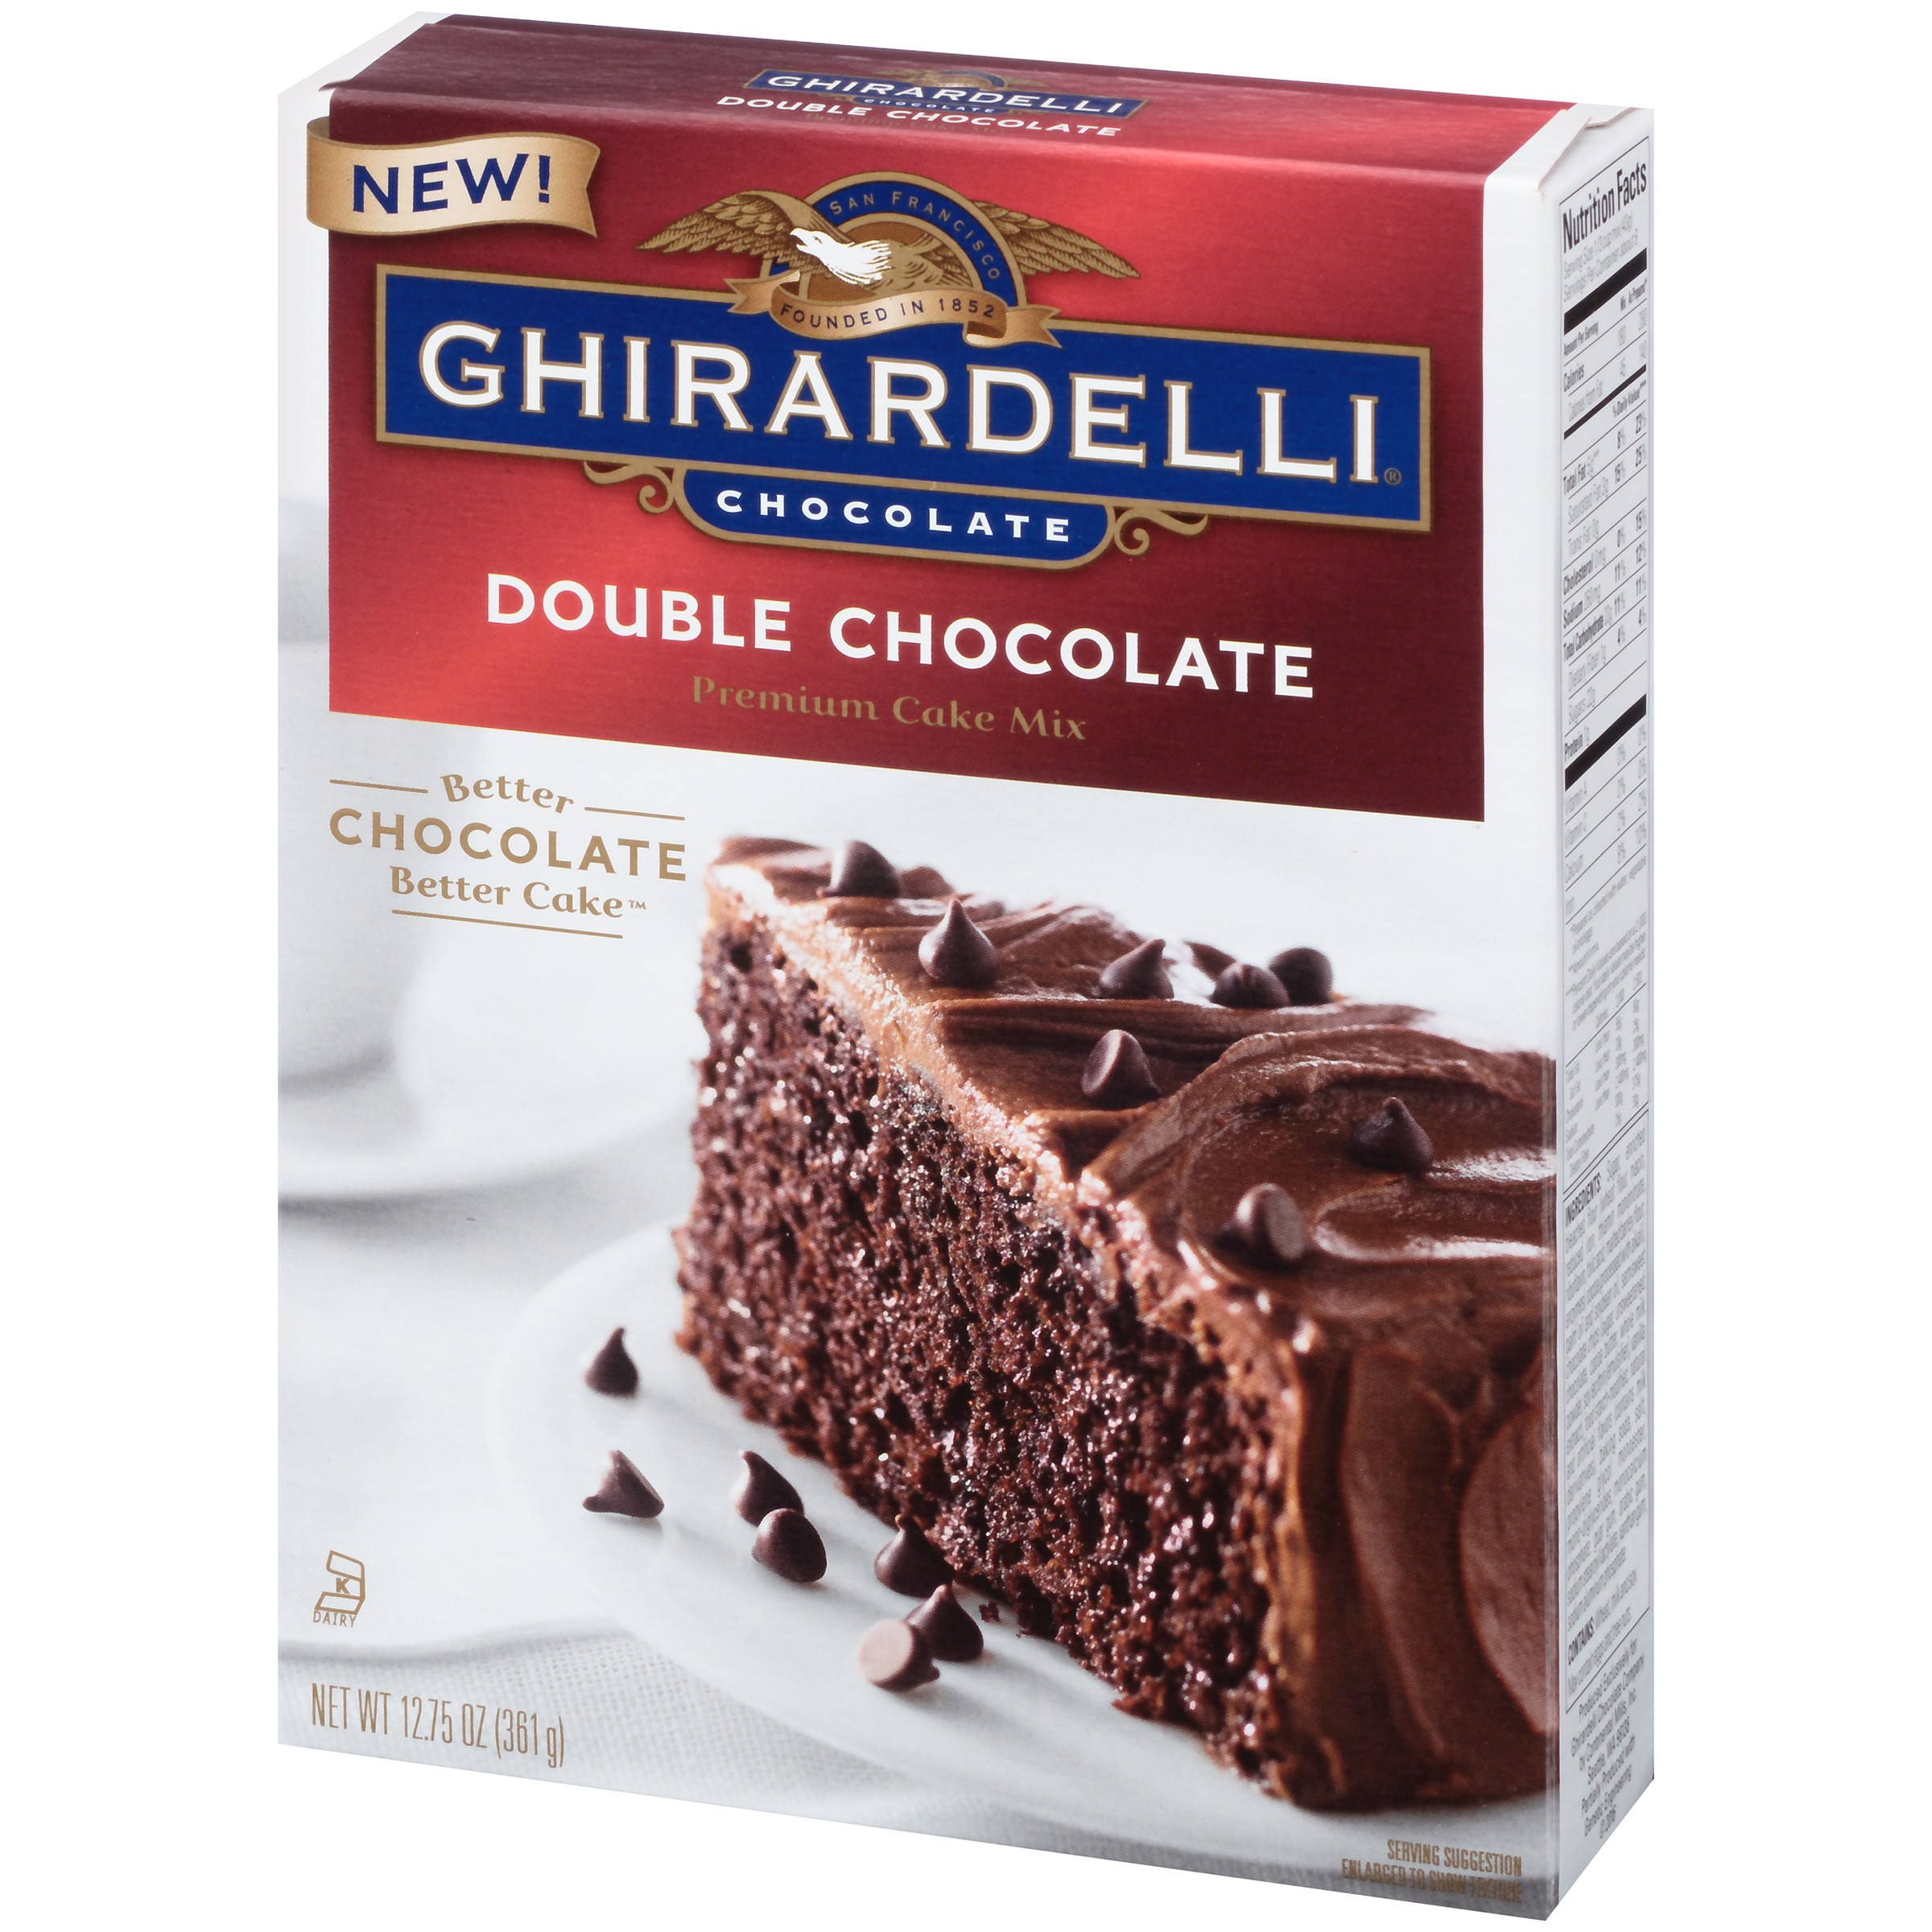 Ghirardelli Chocolate Cake
 ghirardelli chocolate cake mix recipe